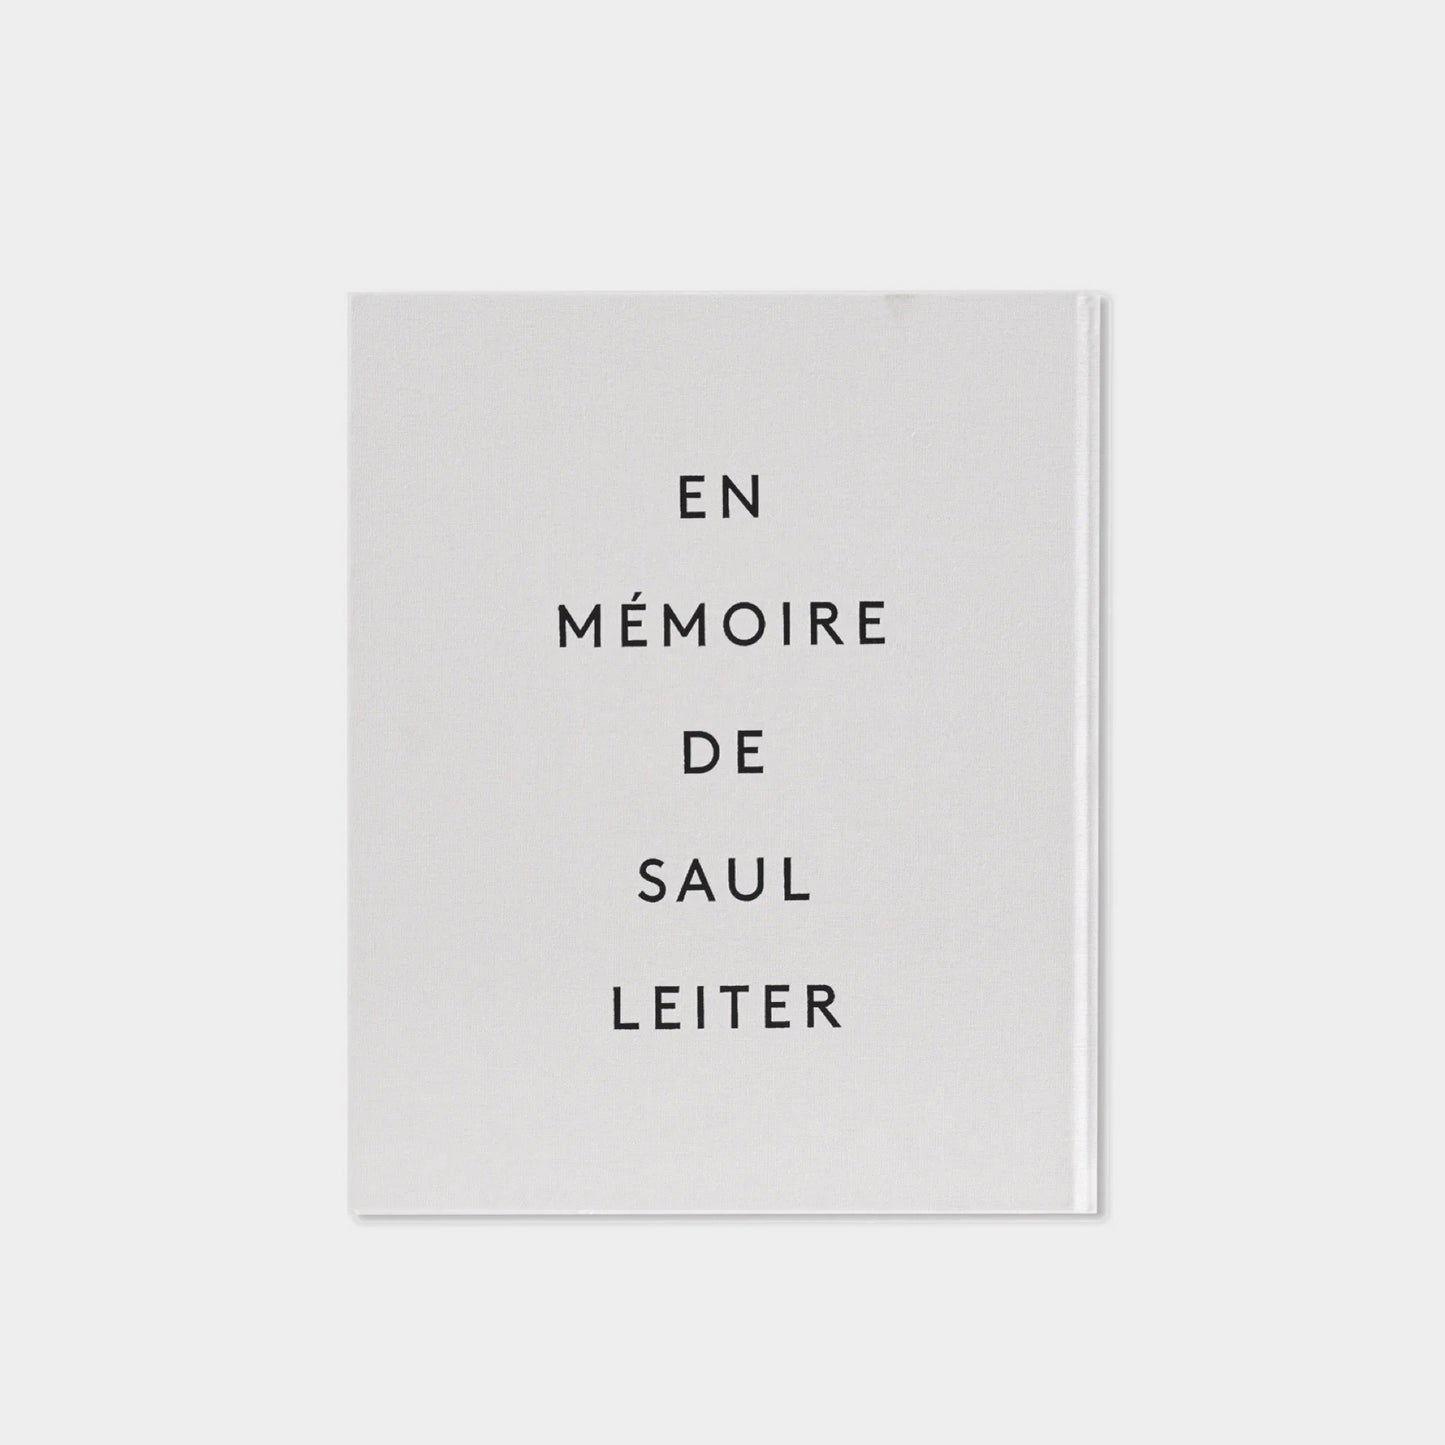 SAUL LEITER by François Halard [SECOND EDITION]